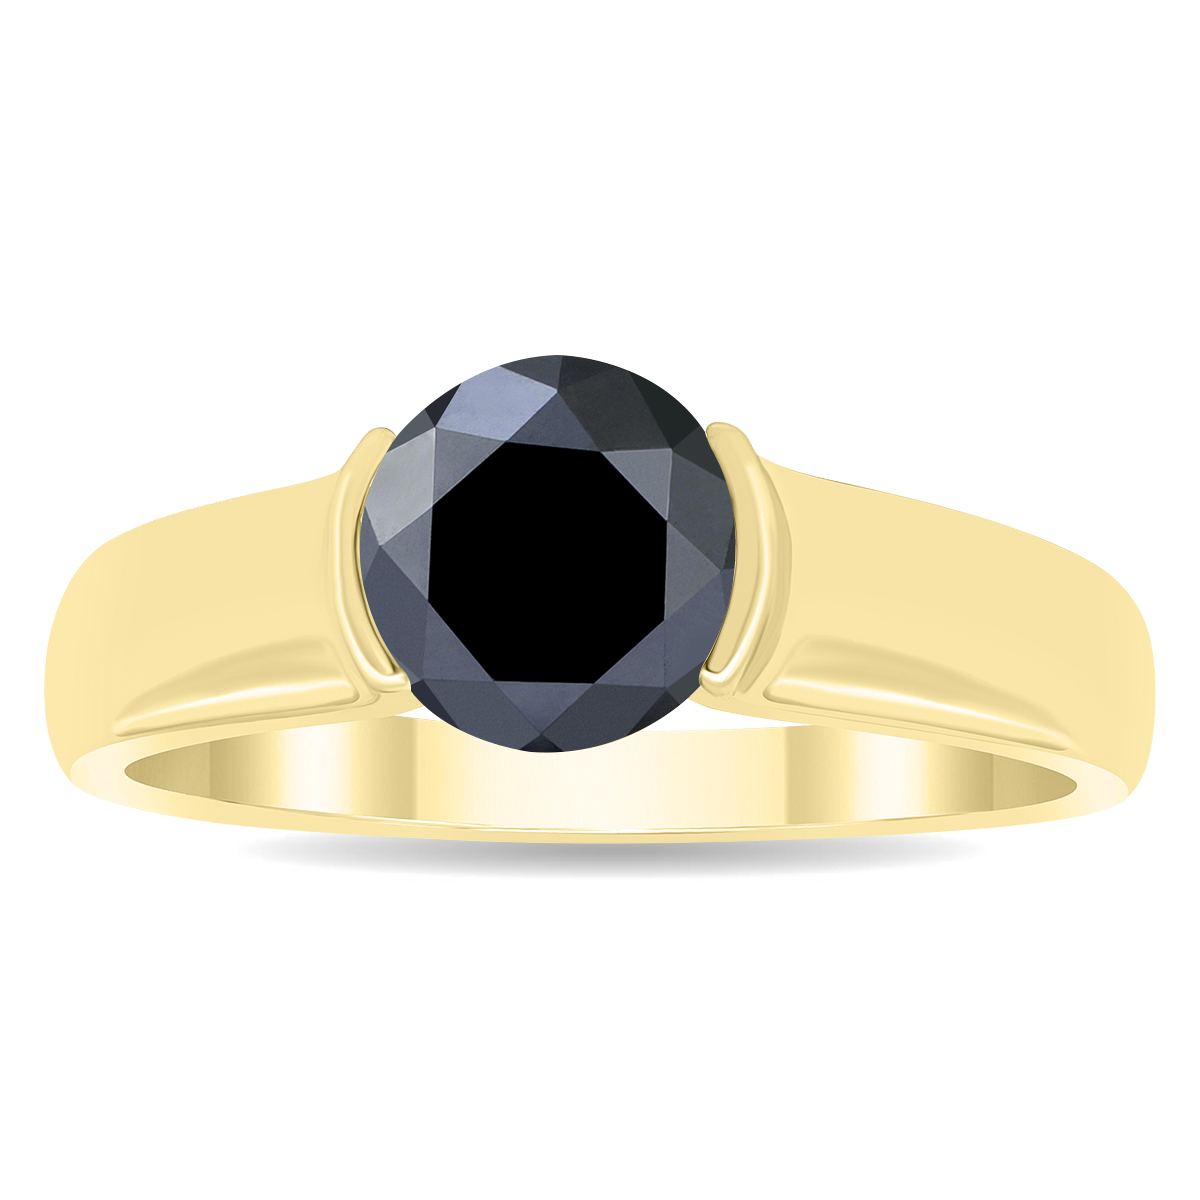 1 1/2 Carat Half Bezel Black Diamond Solitaire Ring in 10K Yellow Gold